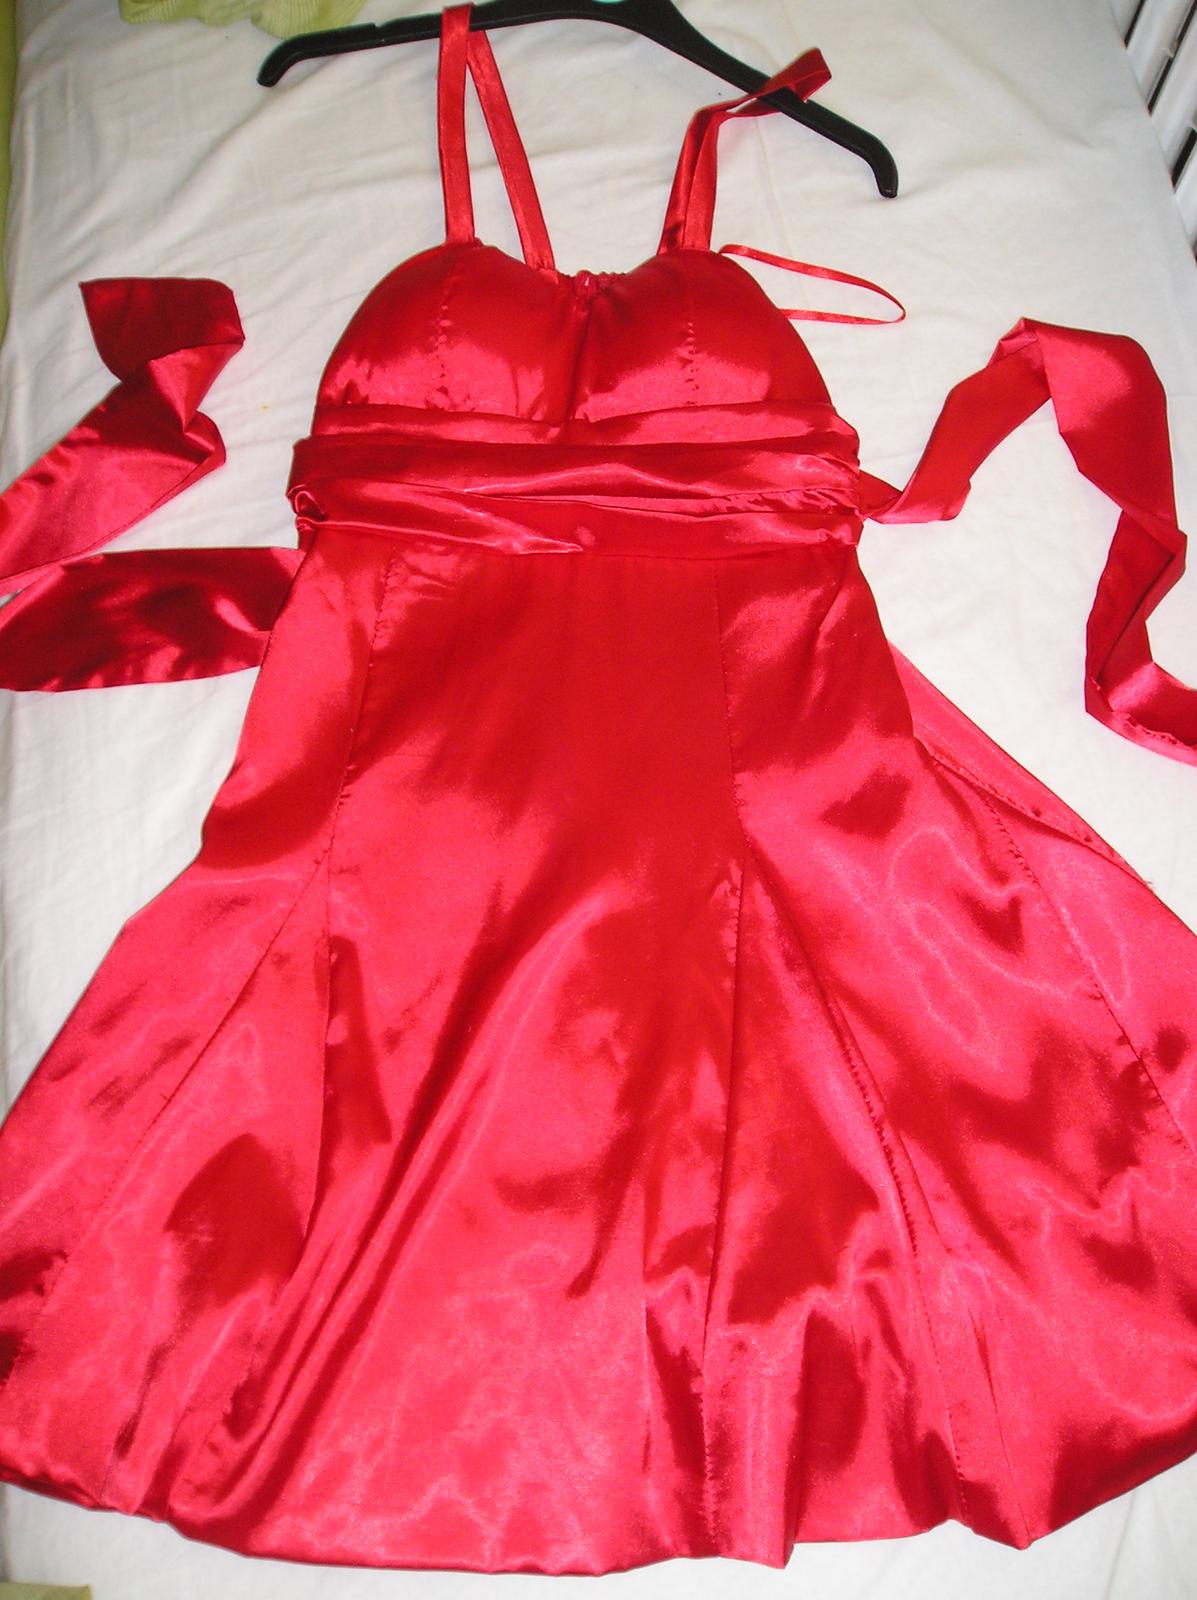 Červené saténové šaty - Obrázok č. 1